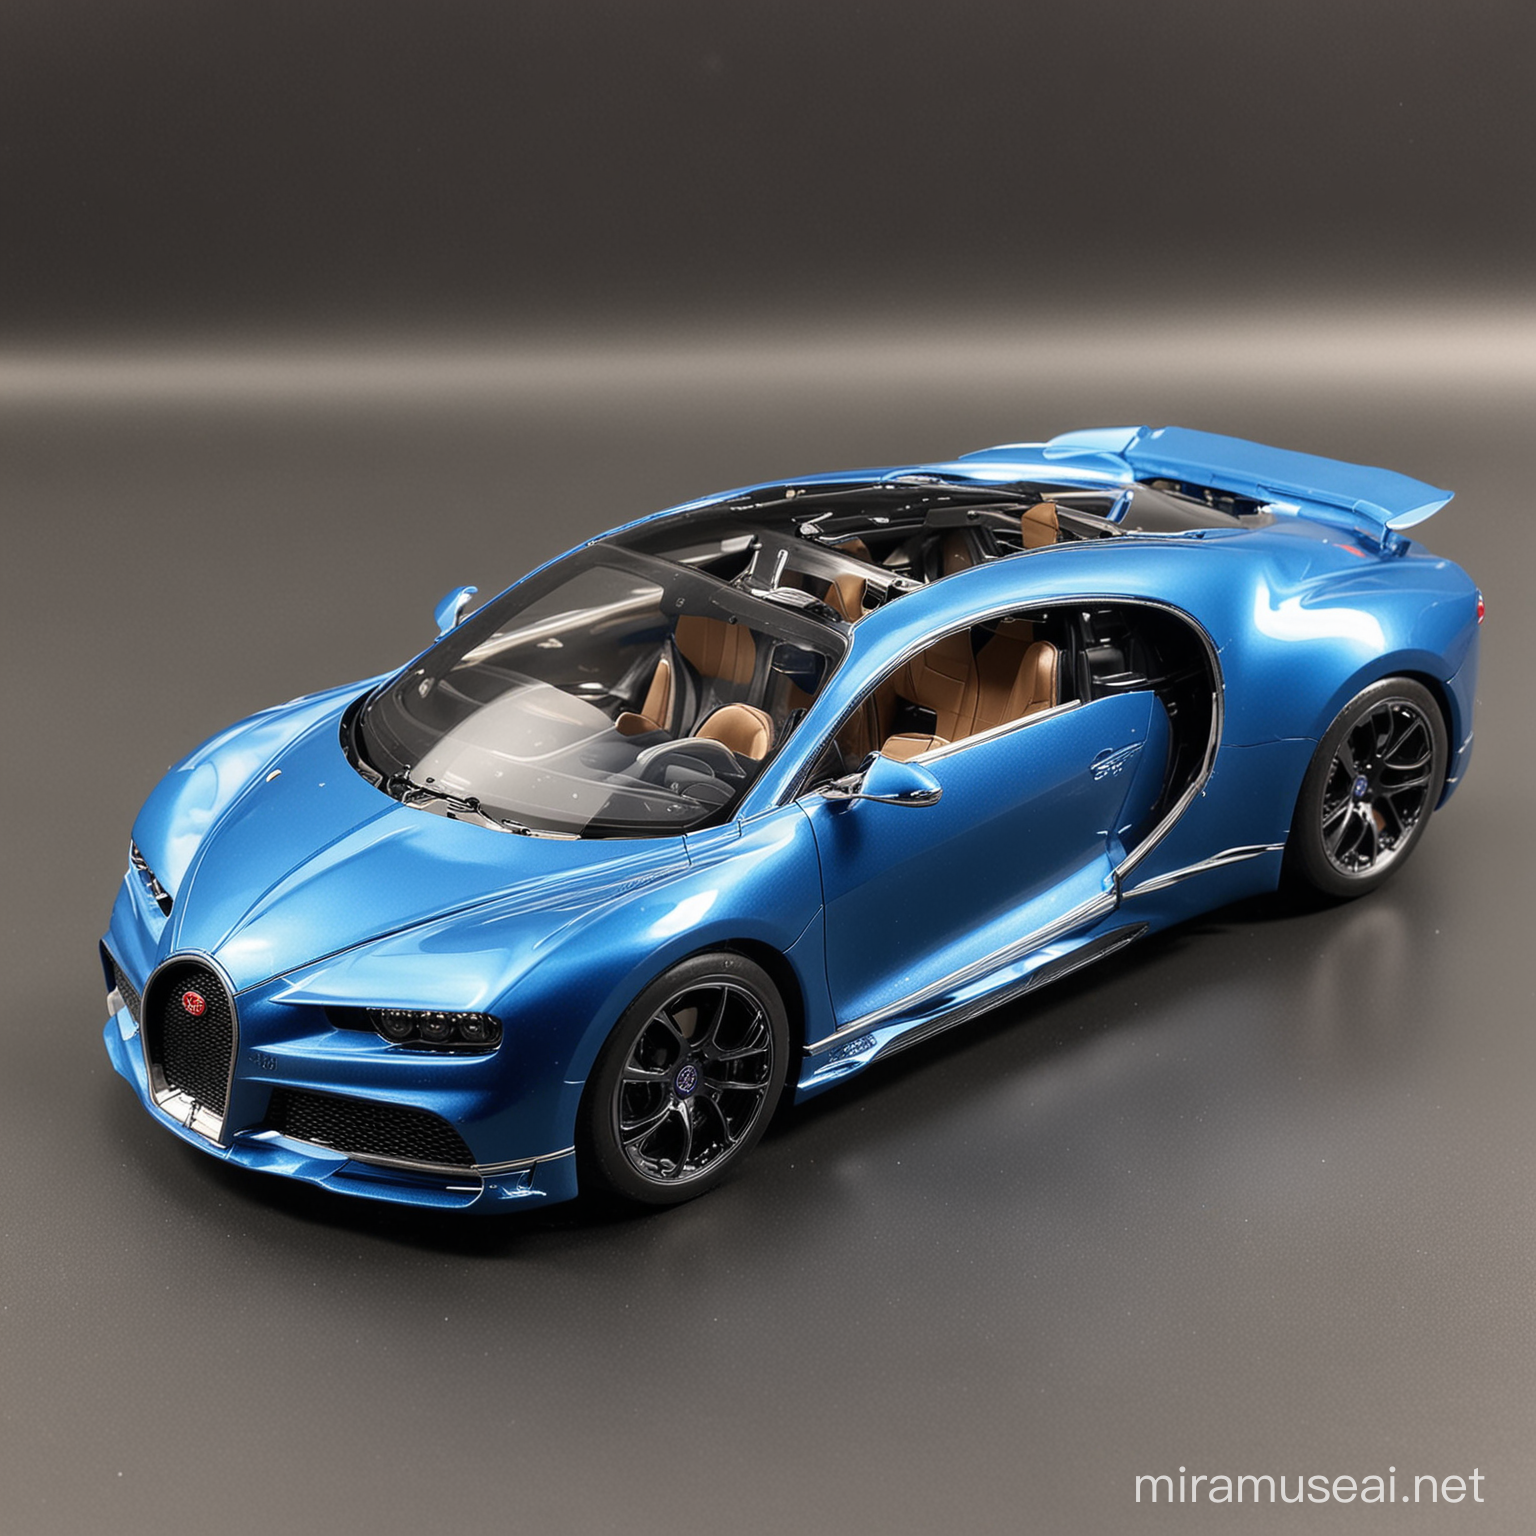 Metallic Bugatti Chiron Model Remote Control Car in Blue Showcase